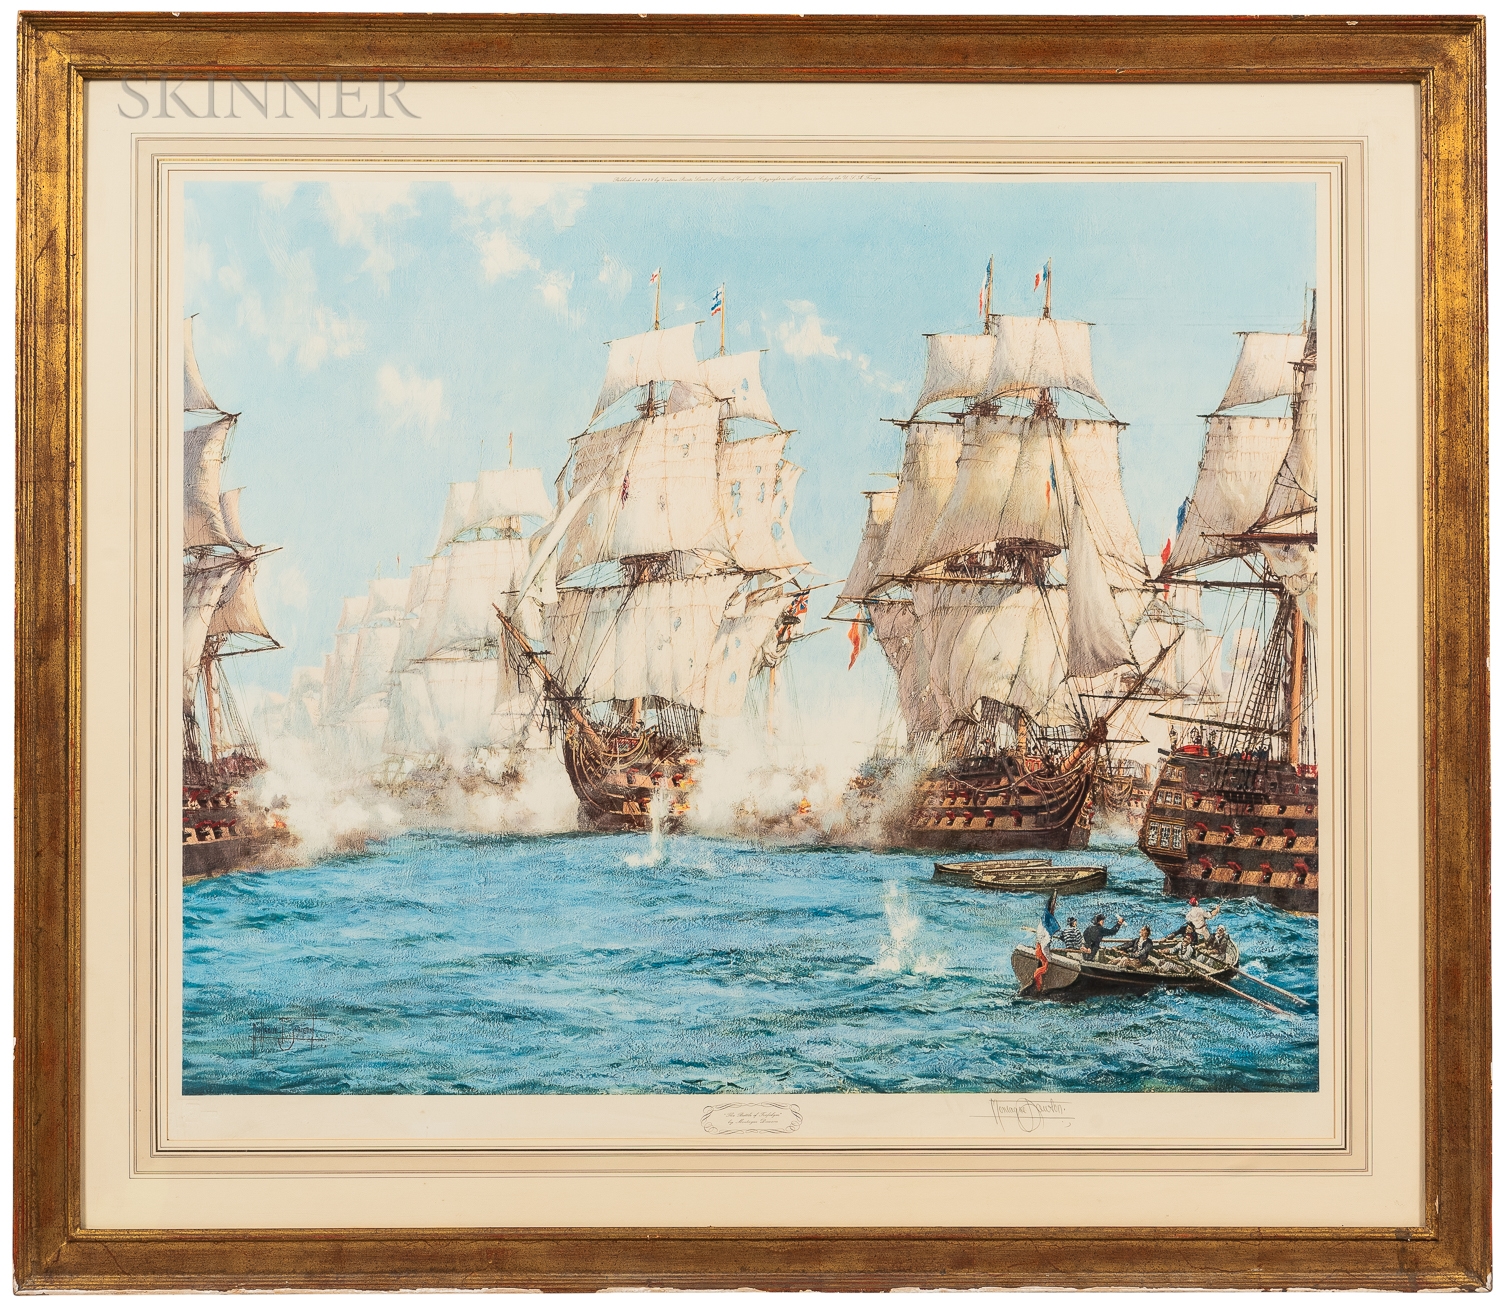 Sold at Auction: Montague Dawson, Montague Dawson, (British, 1890-1973),  The Rising Wind, color lithograph, 36 x 24